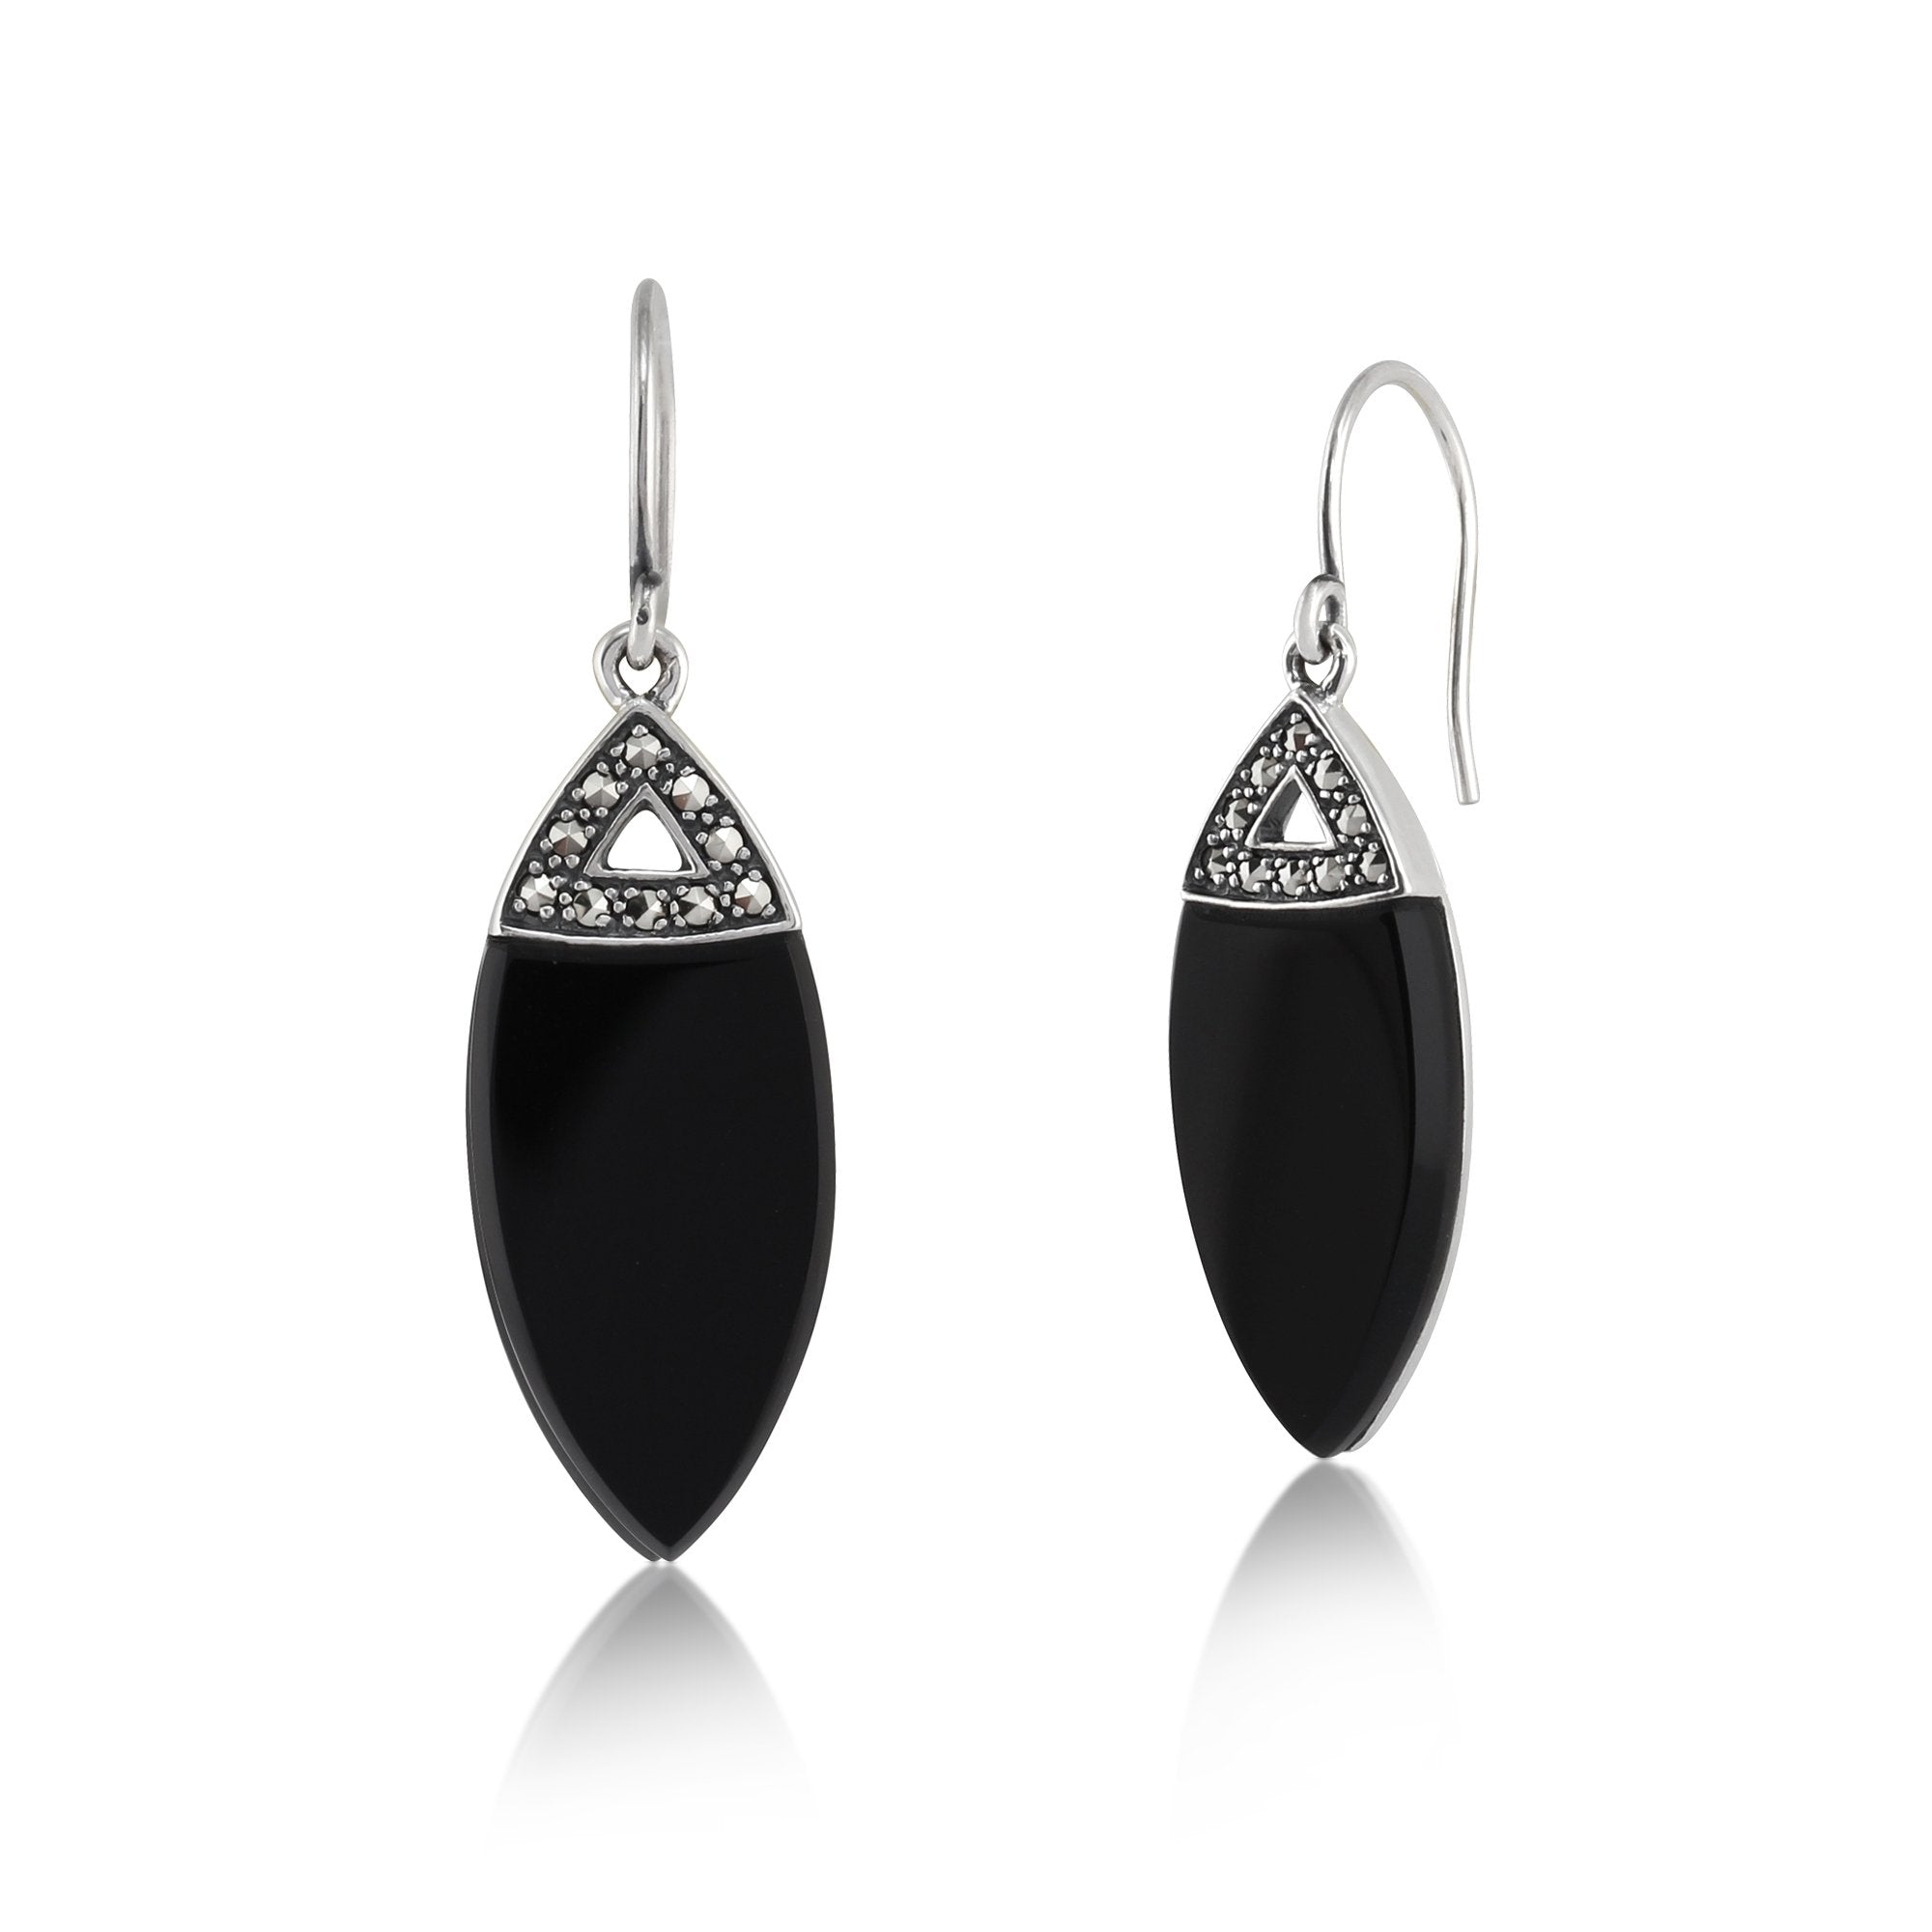 Art Deco Marquise Black Onyx & Marcasite Drop Earrings in 925 Sterling Silver